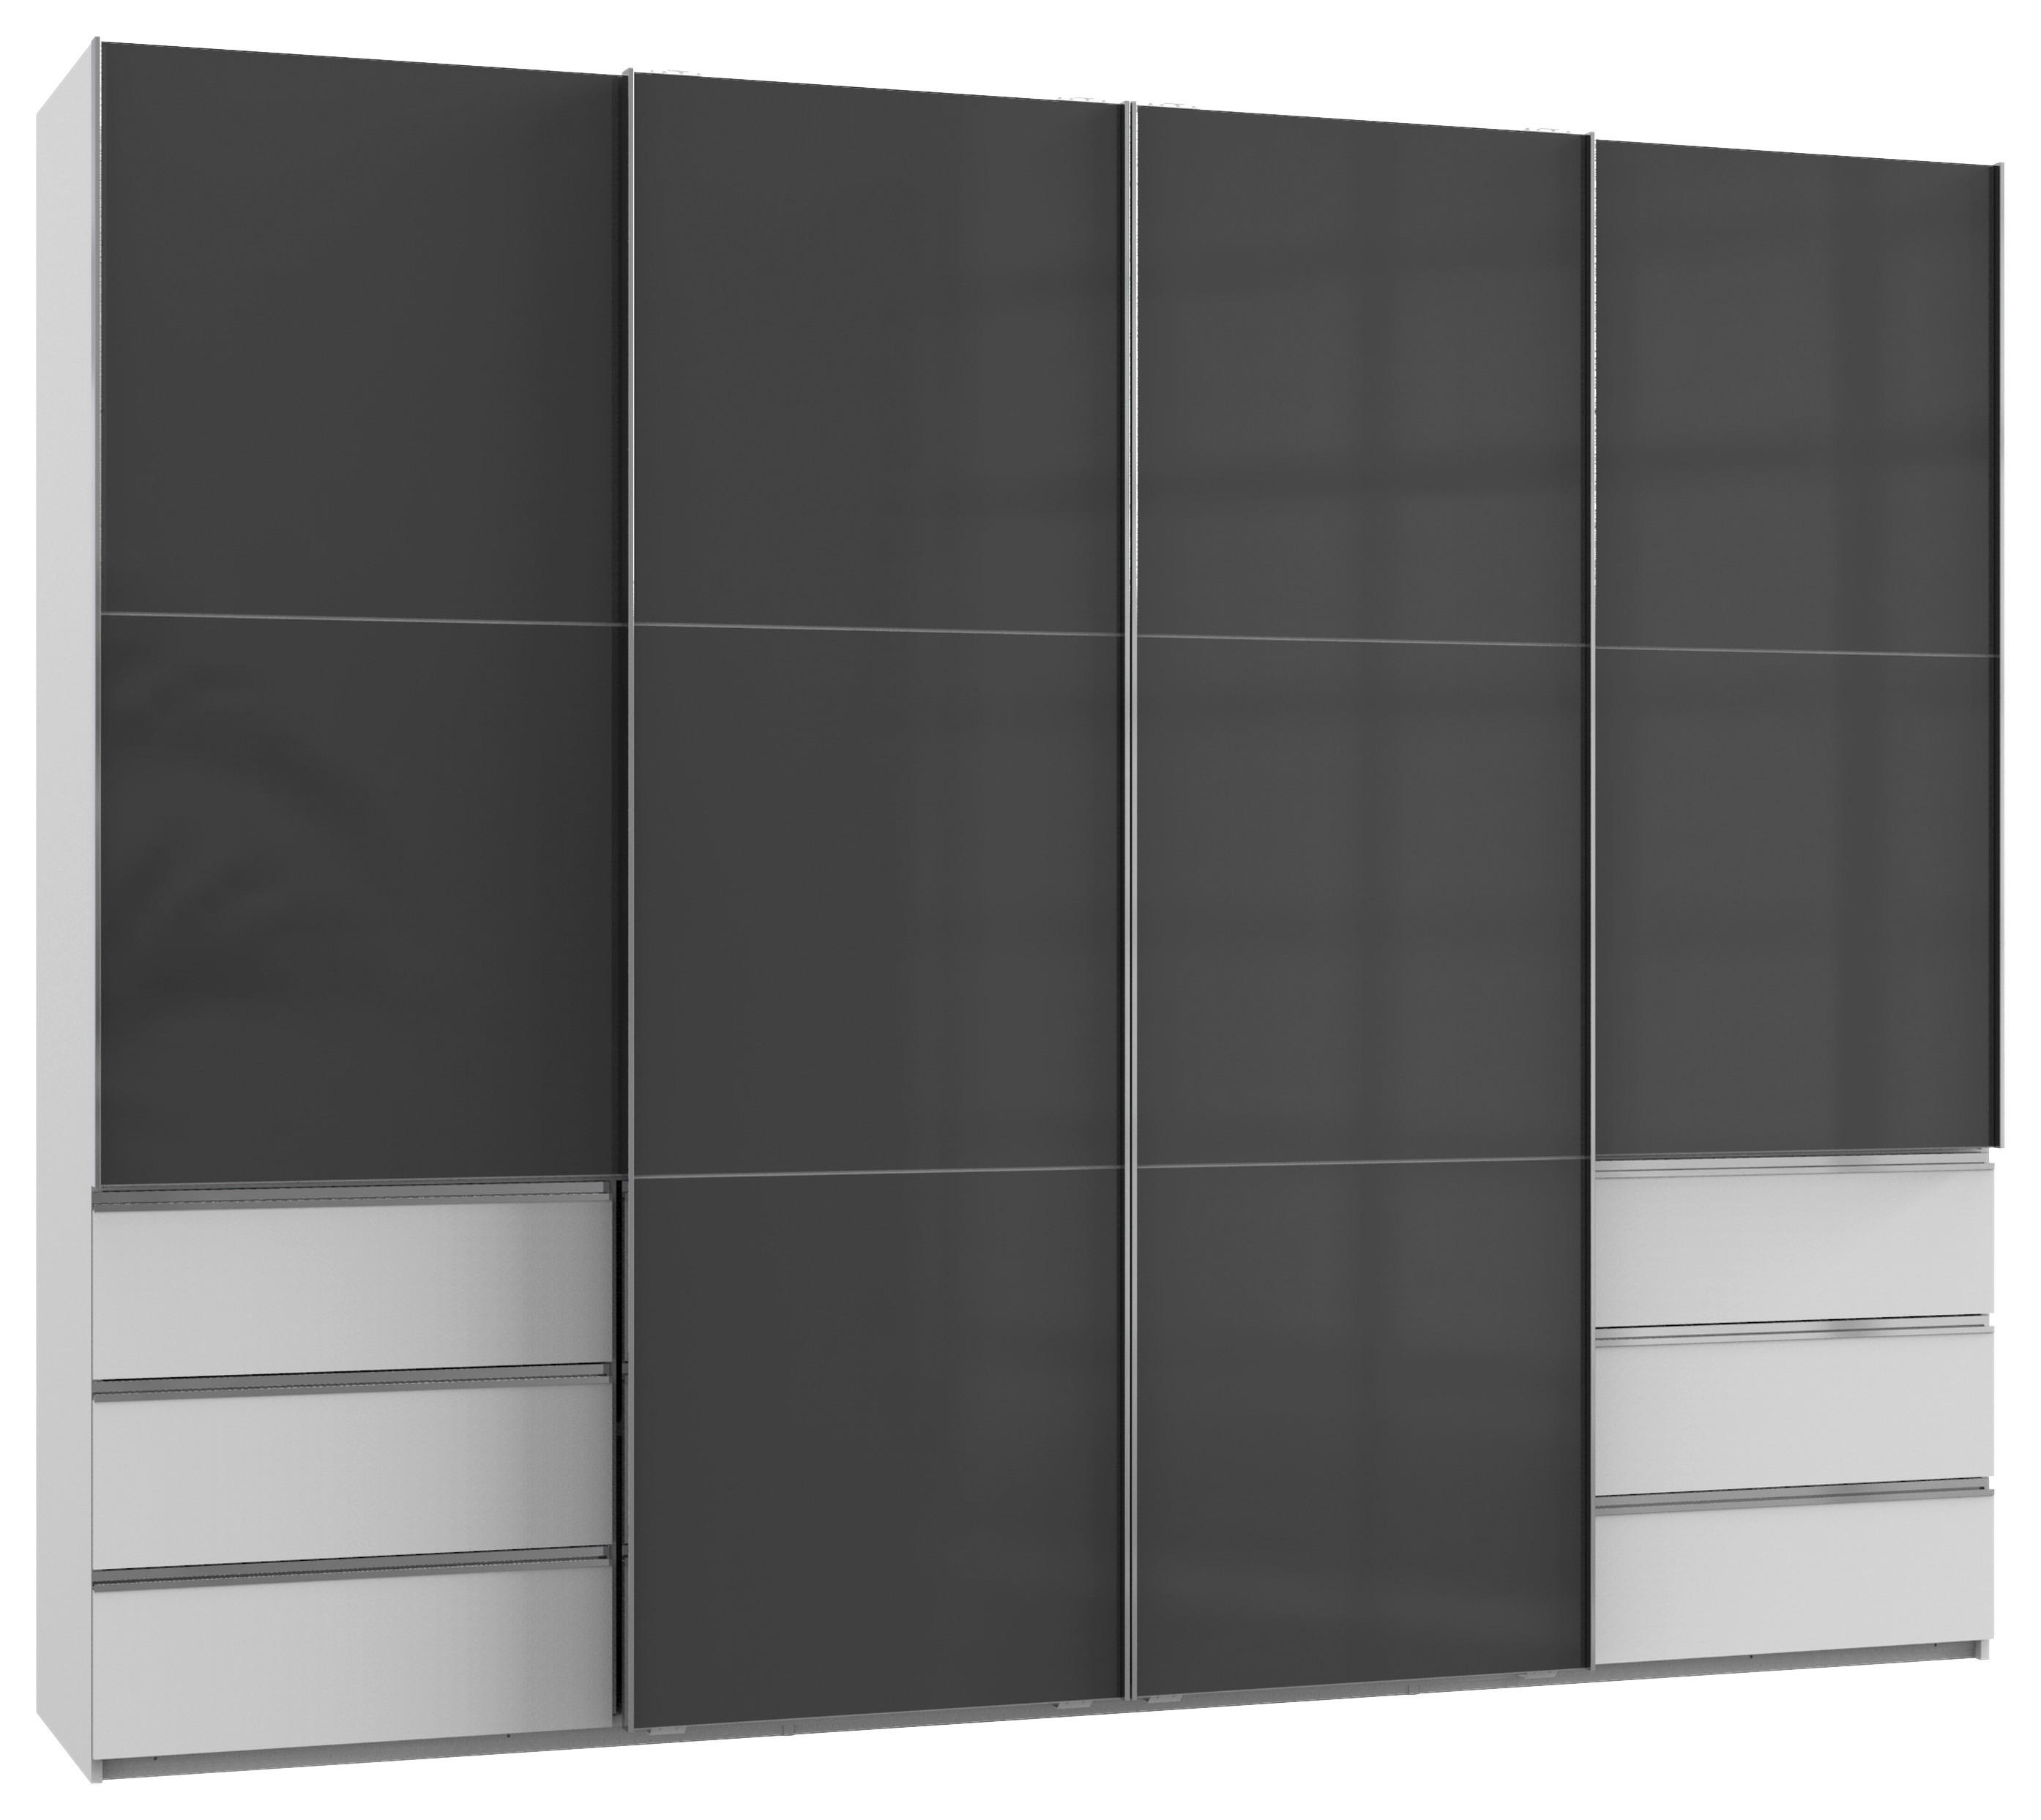 SCHWEBETÜRENSCHRANK 4-türig Grau, Weiß  - Chromfarben/Weiß, MODERN (300/236/65cm) - MID.YOU